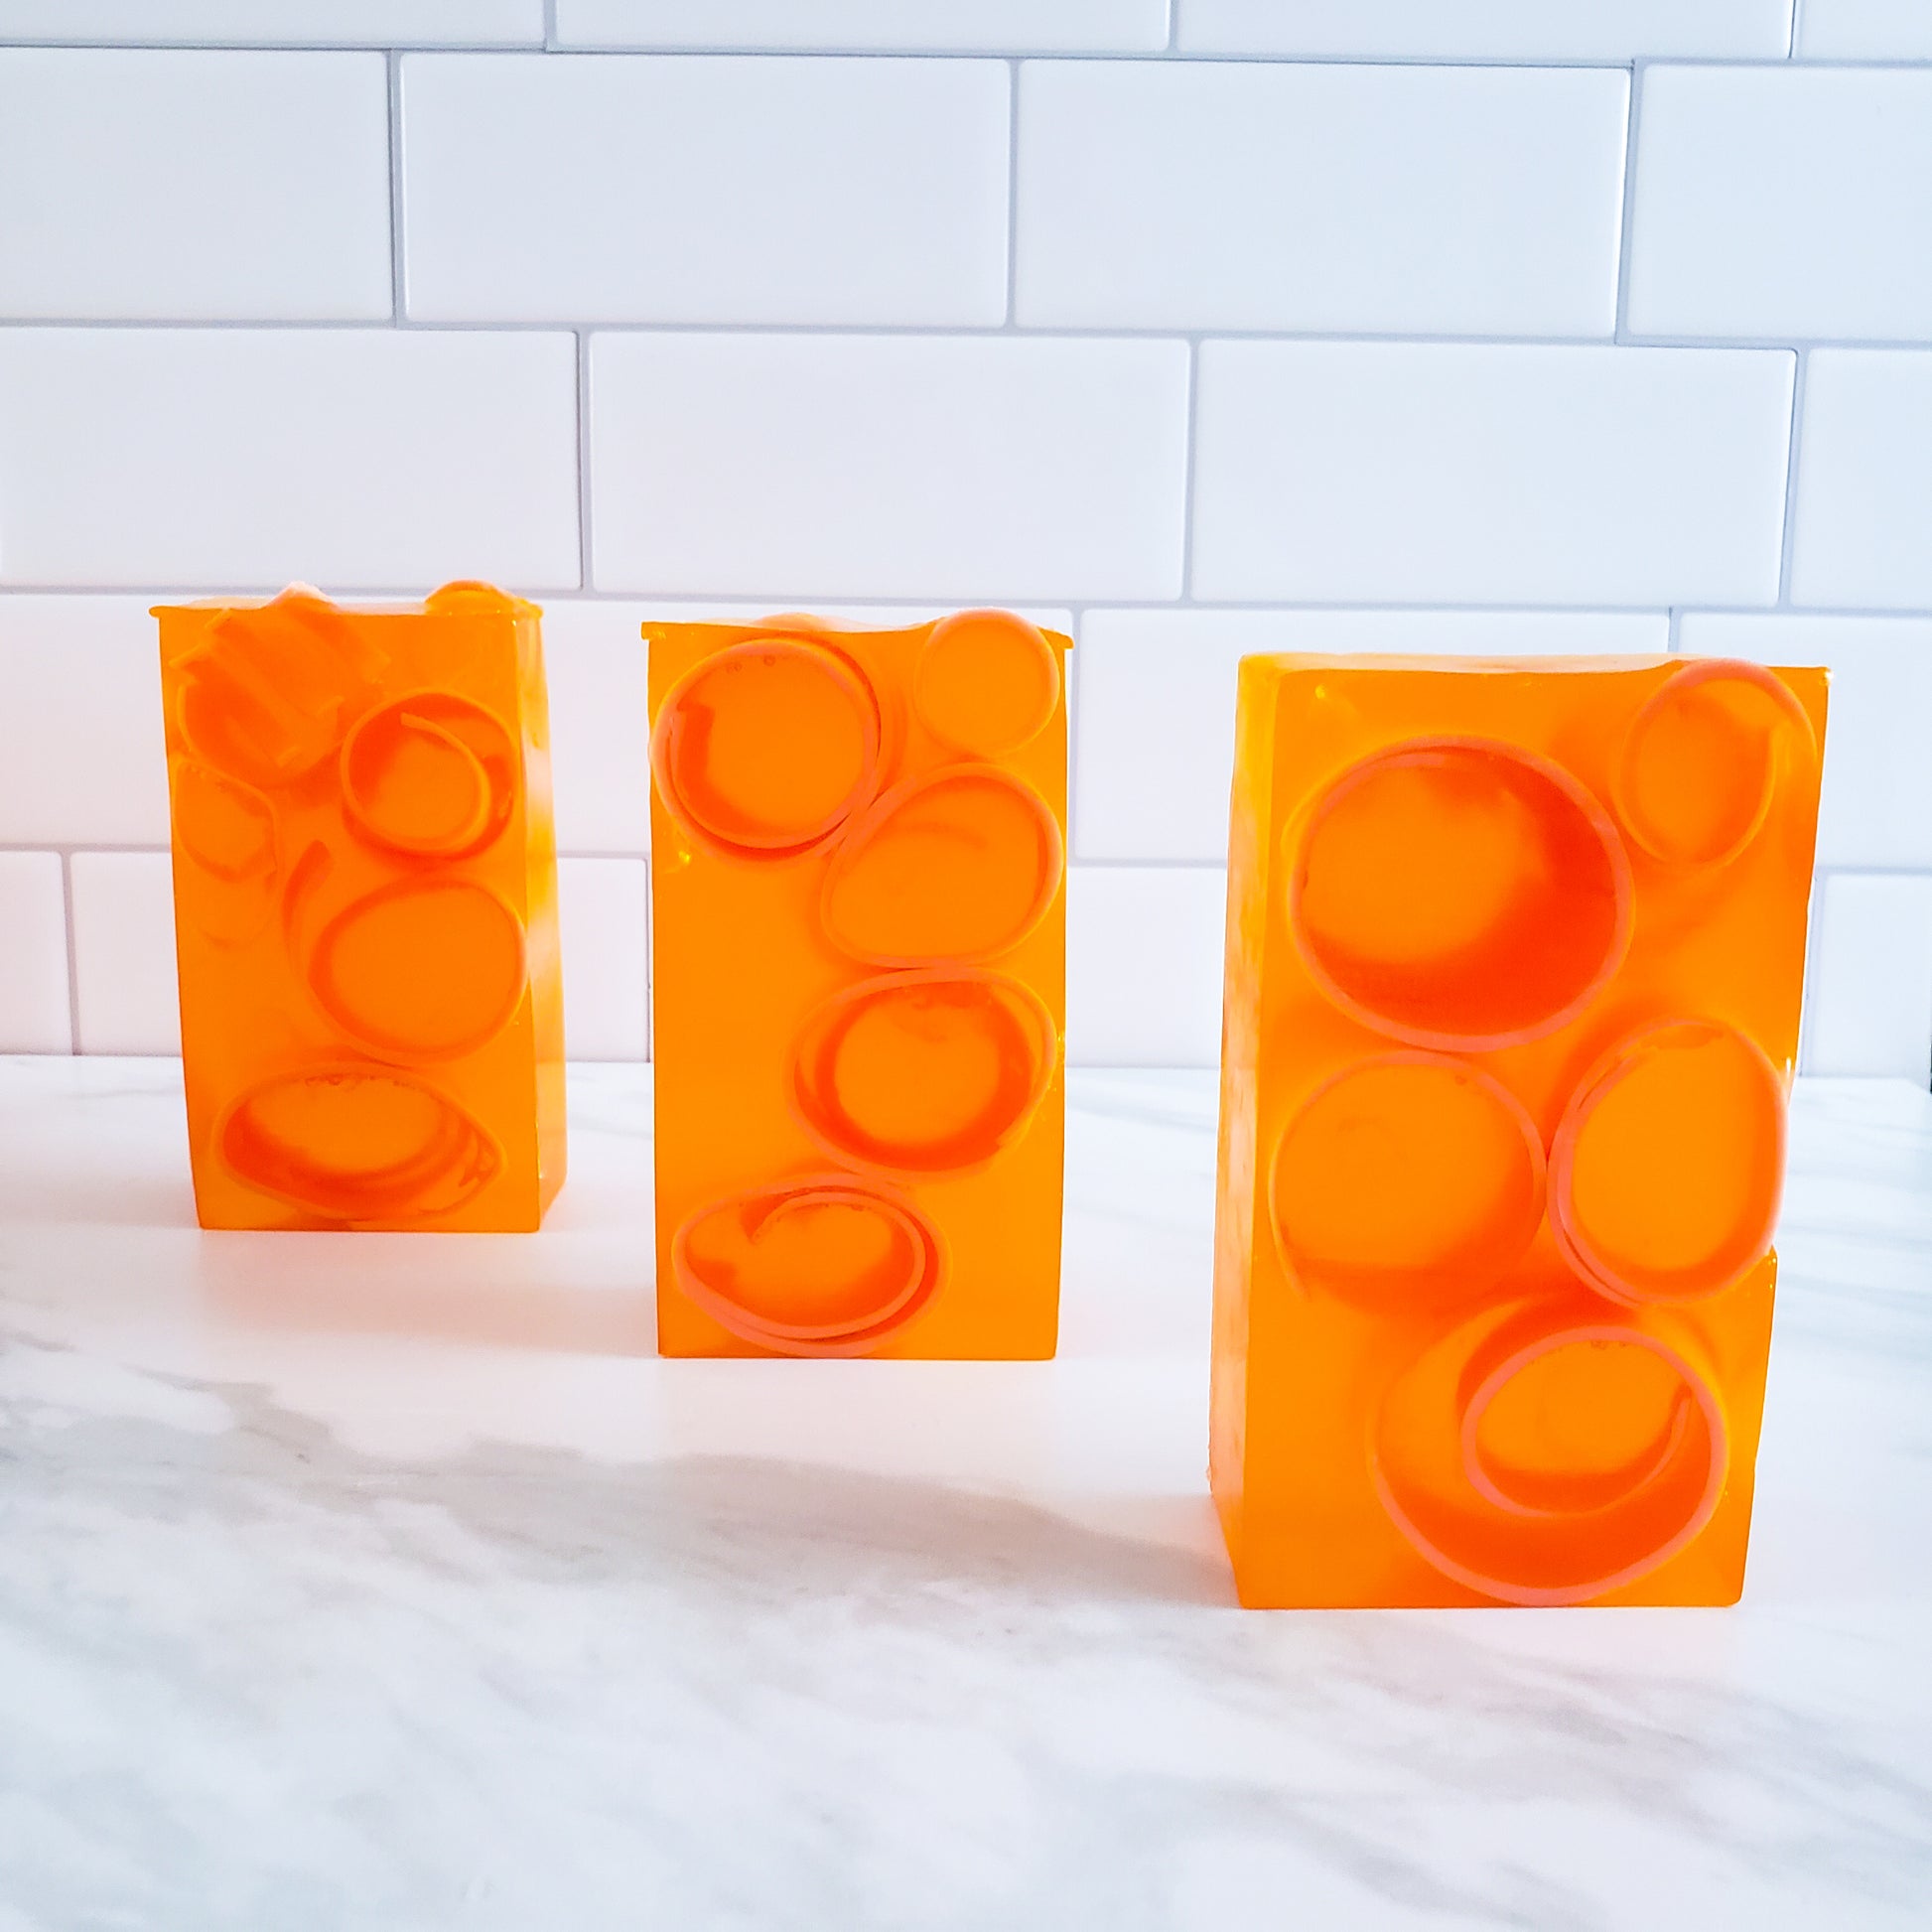 Three transparent orange bars of soap, with dark orange soap curls inside